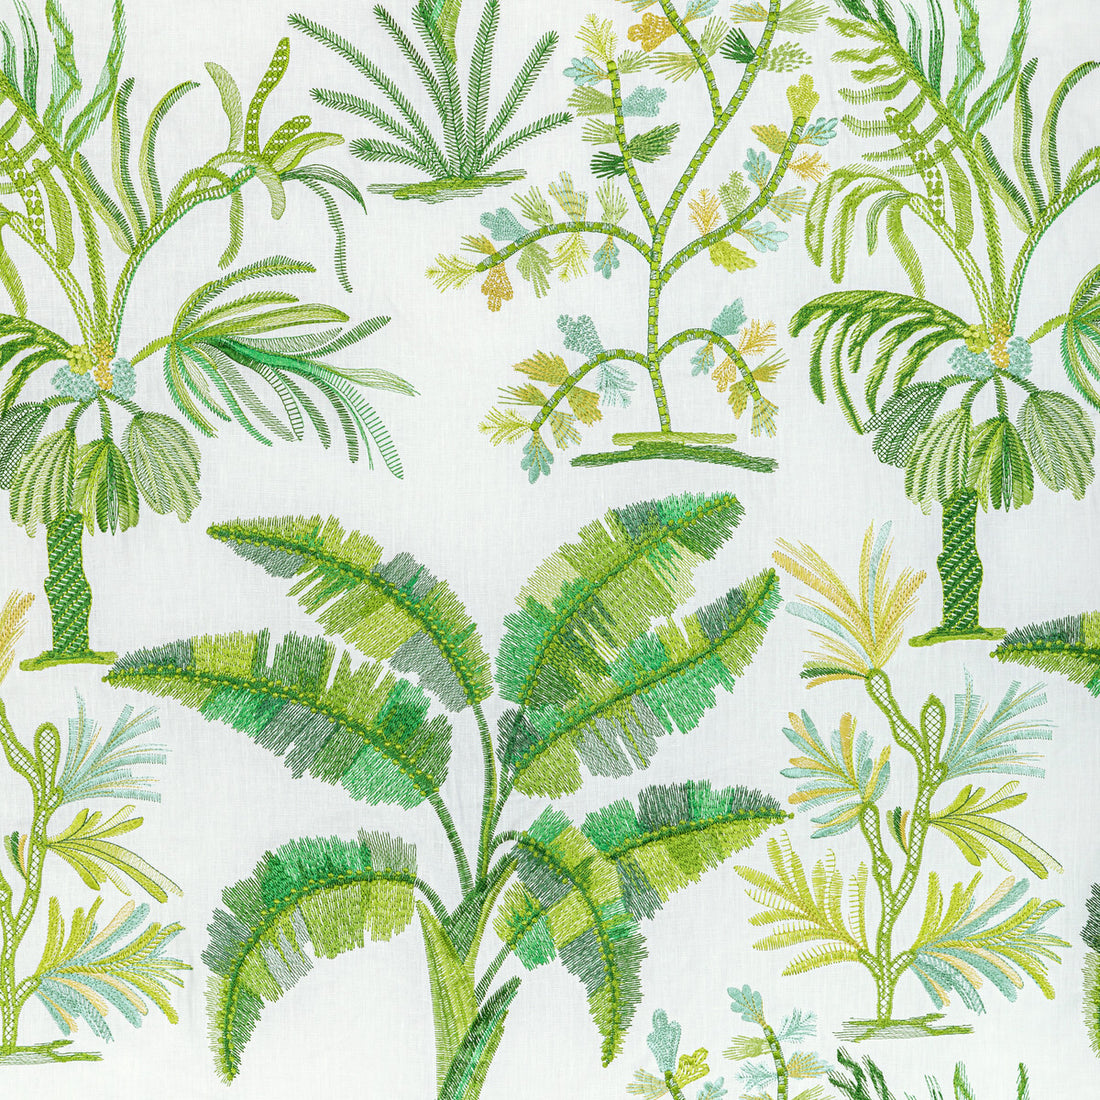 Martil Emb fabric in leaf color - pattern 8022134.3.0 - by Brunschwig &amp; Fils in the Majorelle collection